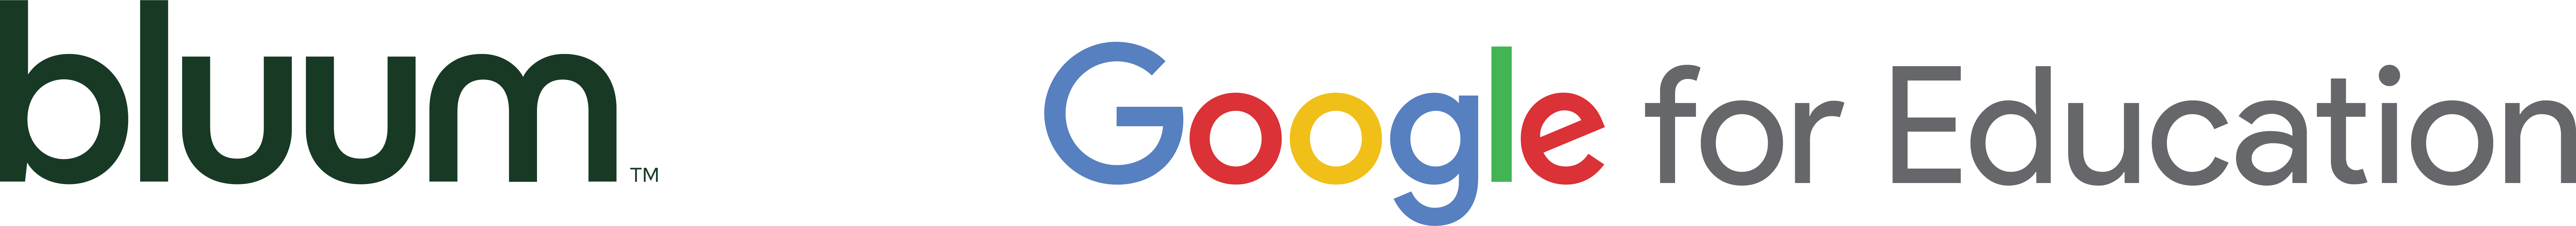 Cobrand logo of Bluum and Google